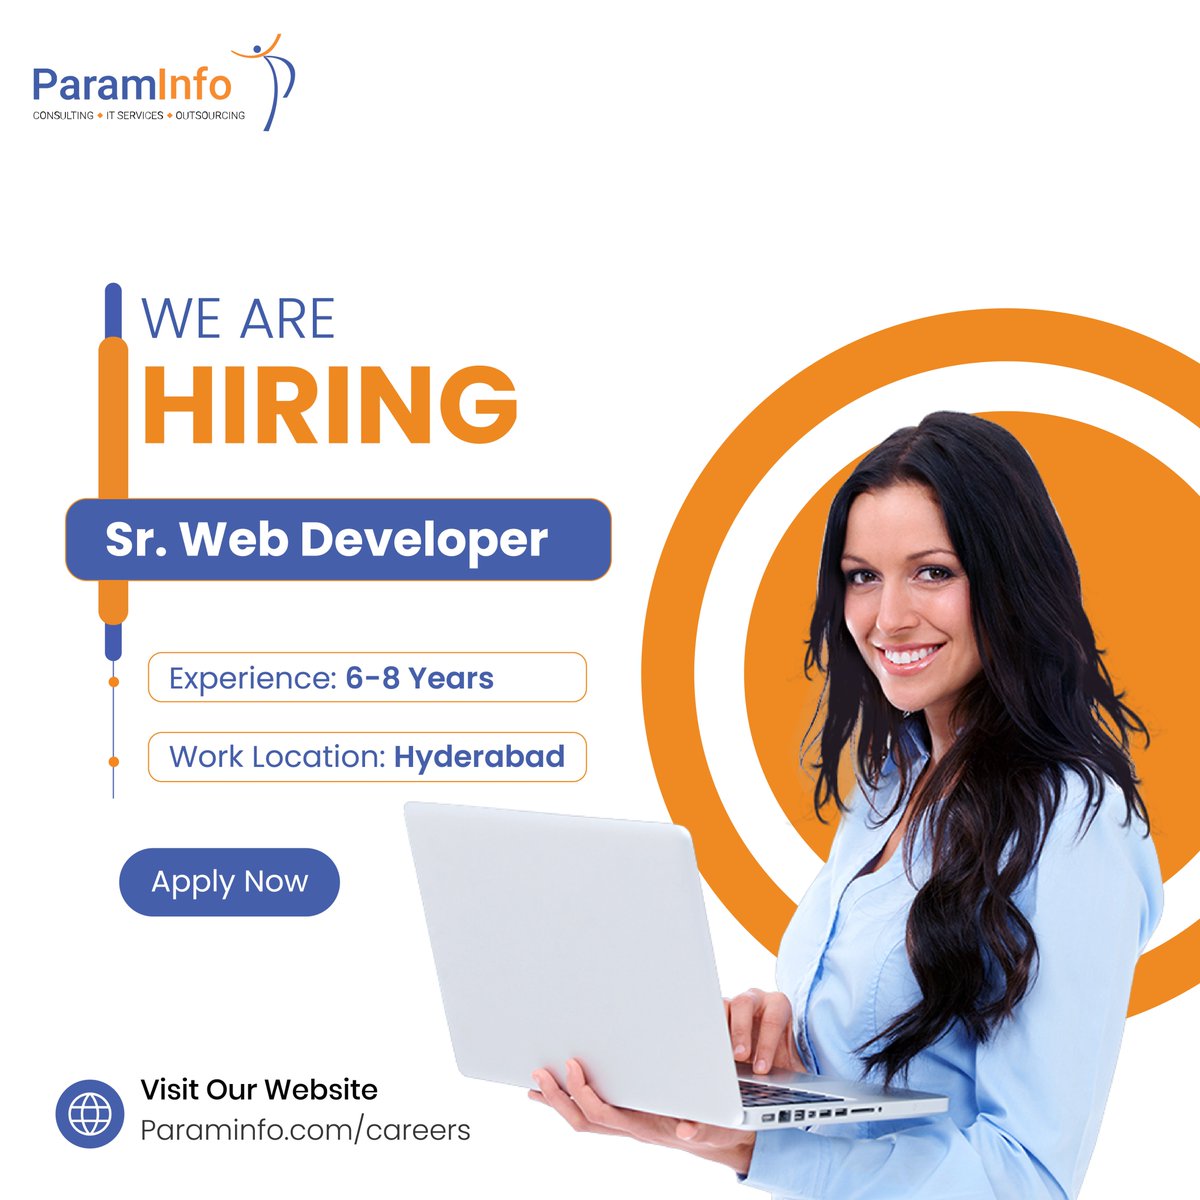 𝐉𝐨𝐛 𝐓𝐢𝐭𝐥𝐞: Sr. Web Developer 📢
𝐀𝐩𝐩𝐥𝐲 𝐍𝐨𝐰: bit.ly/3W0PSdU 👈
𝐄𝐱𝐩𝐞𝐫𝐢𝐞𝐧𝐜𝐞: 6 -8 Years
𝐋𝐨𝐜𝐚𝐭𝐢𝐨𝐧: Hyderabad, India

#Applynow #indiajobs #Hyderabad #srWebDeveloper #ReactJS #nextjs #typescript #debugging #agile #Redux #recruitment #paraminfo